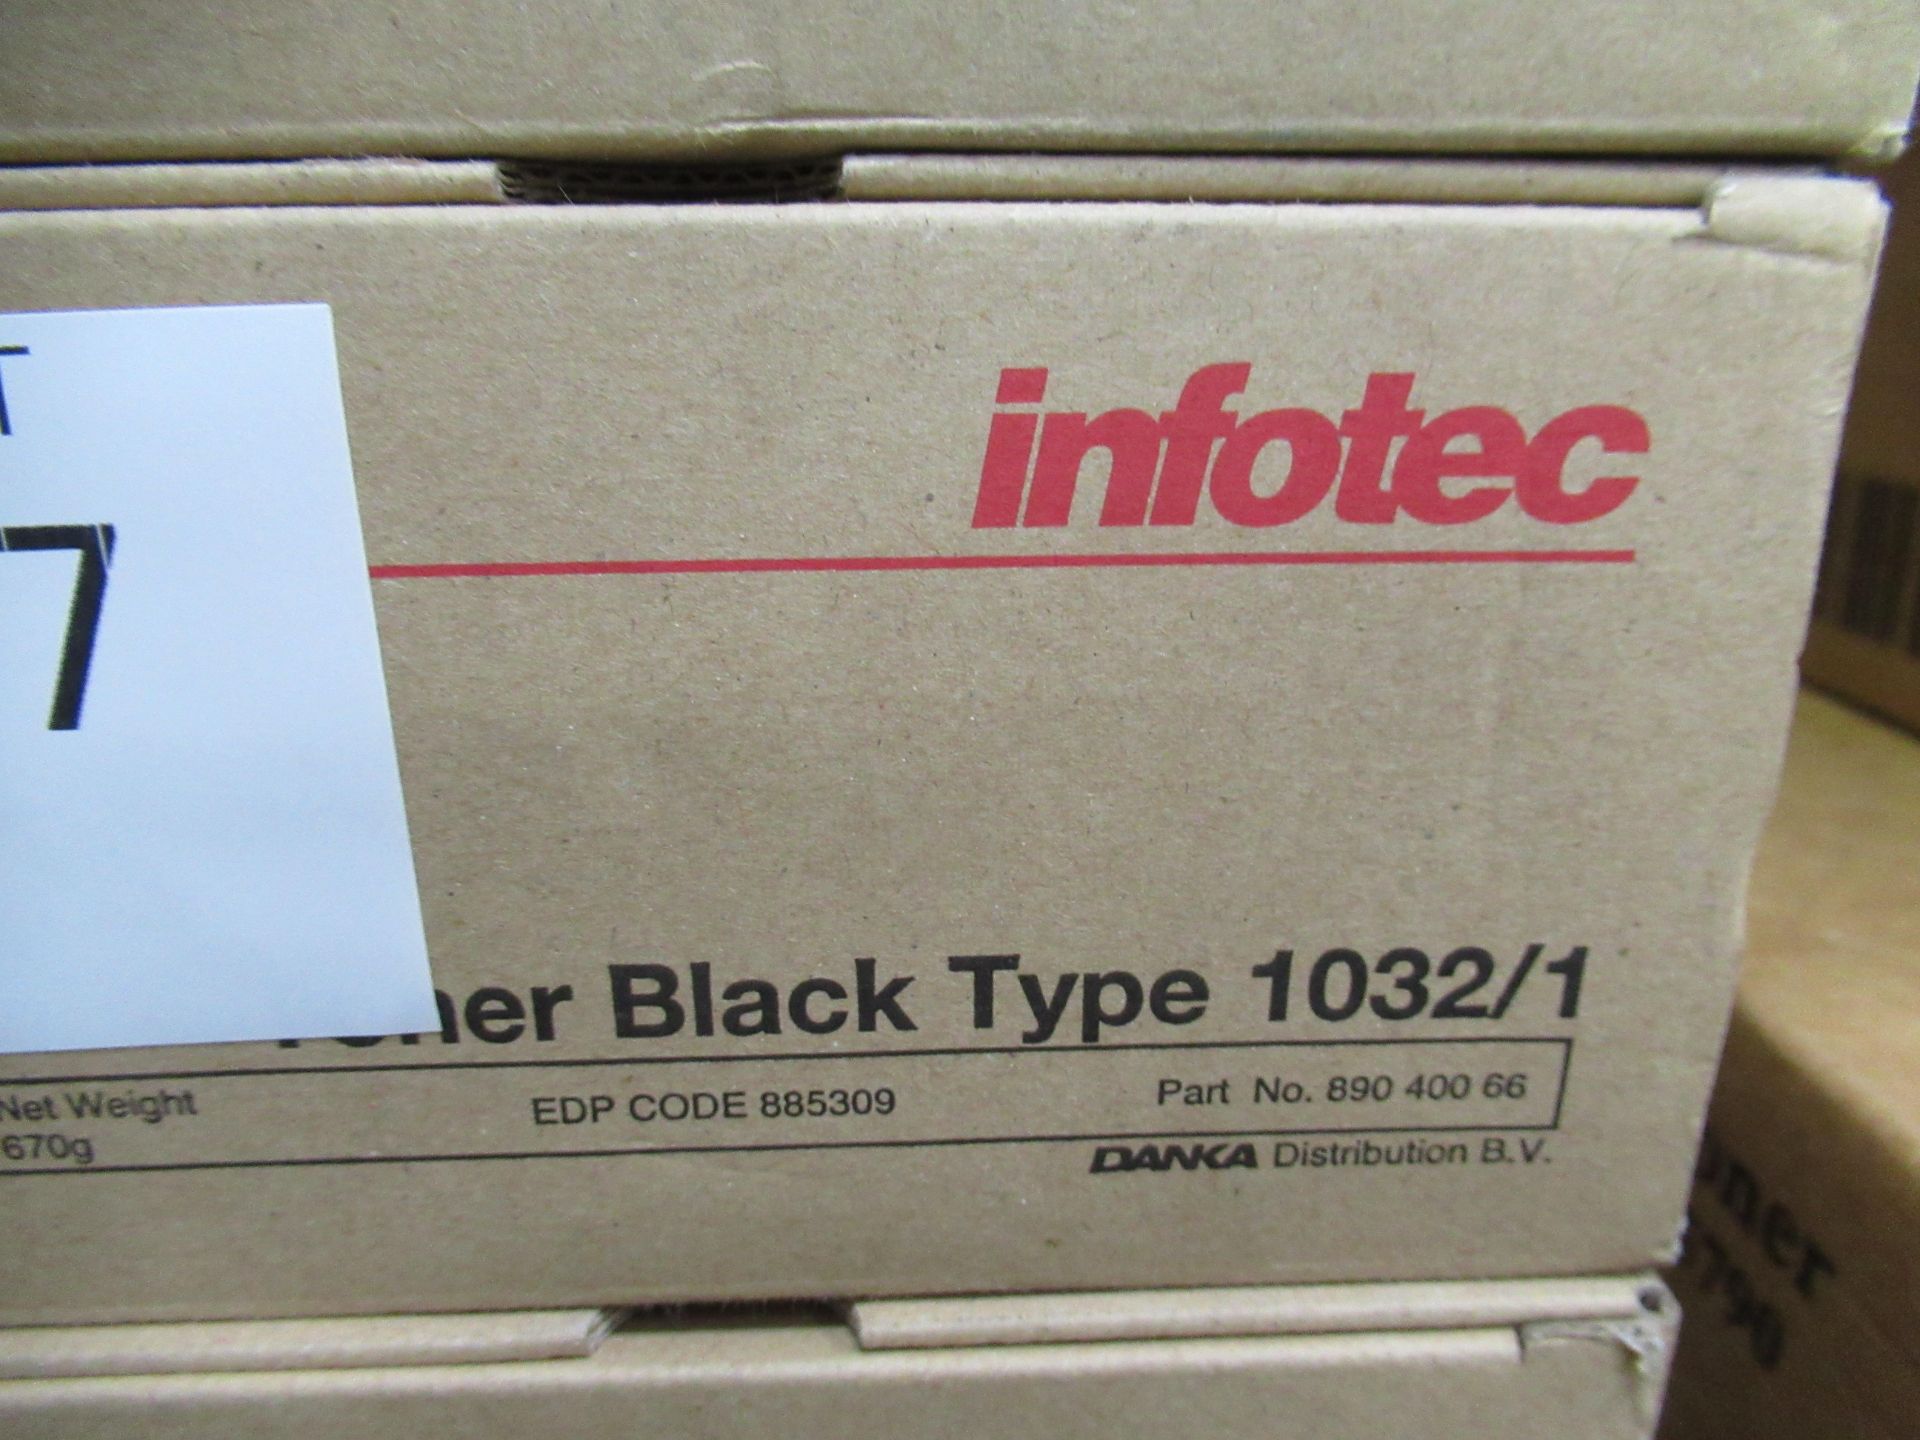 6x Infotec 1032/1 toner cartridges - Image 3 of 4